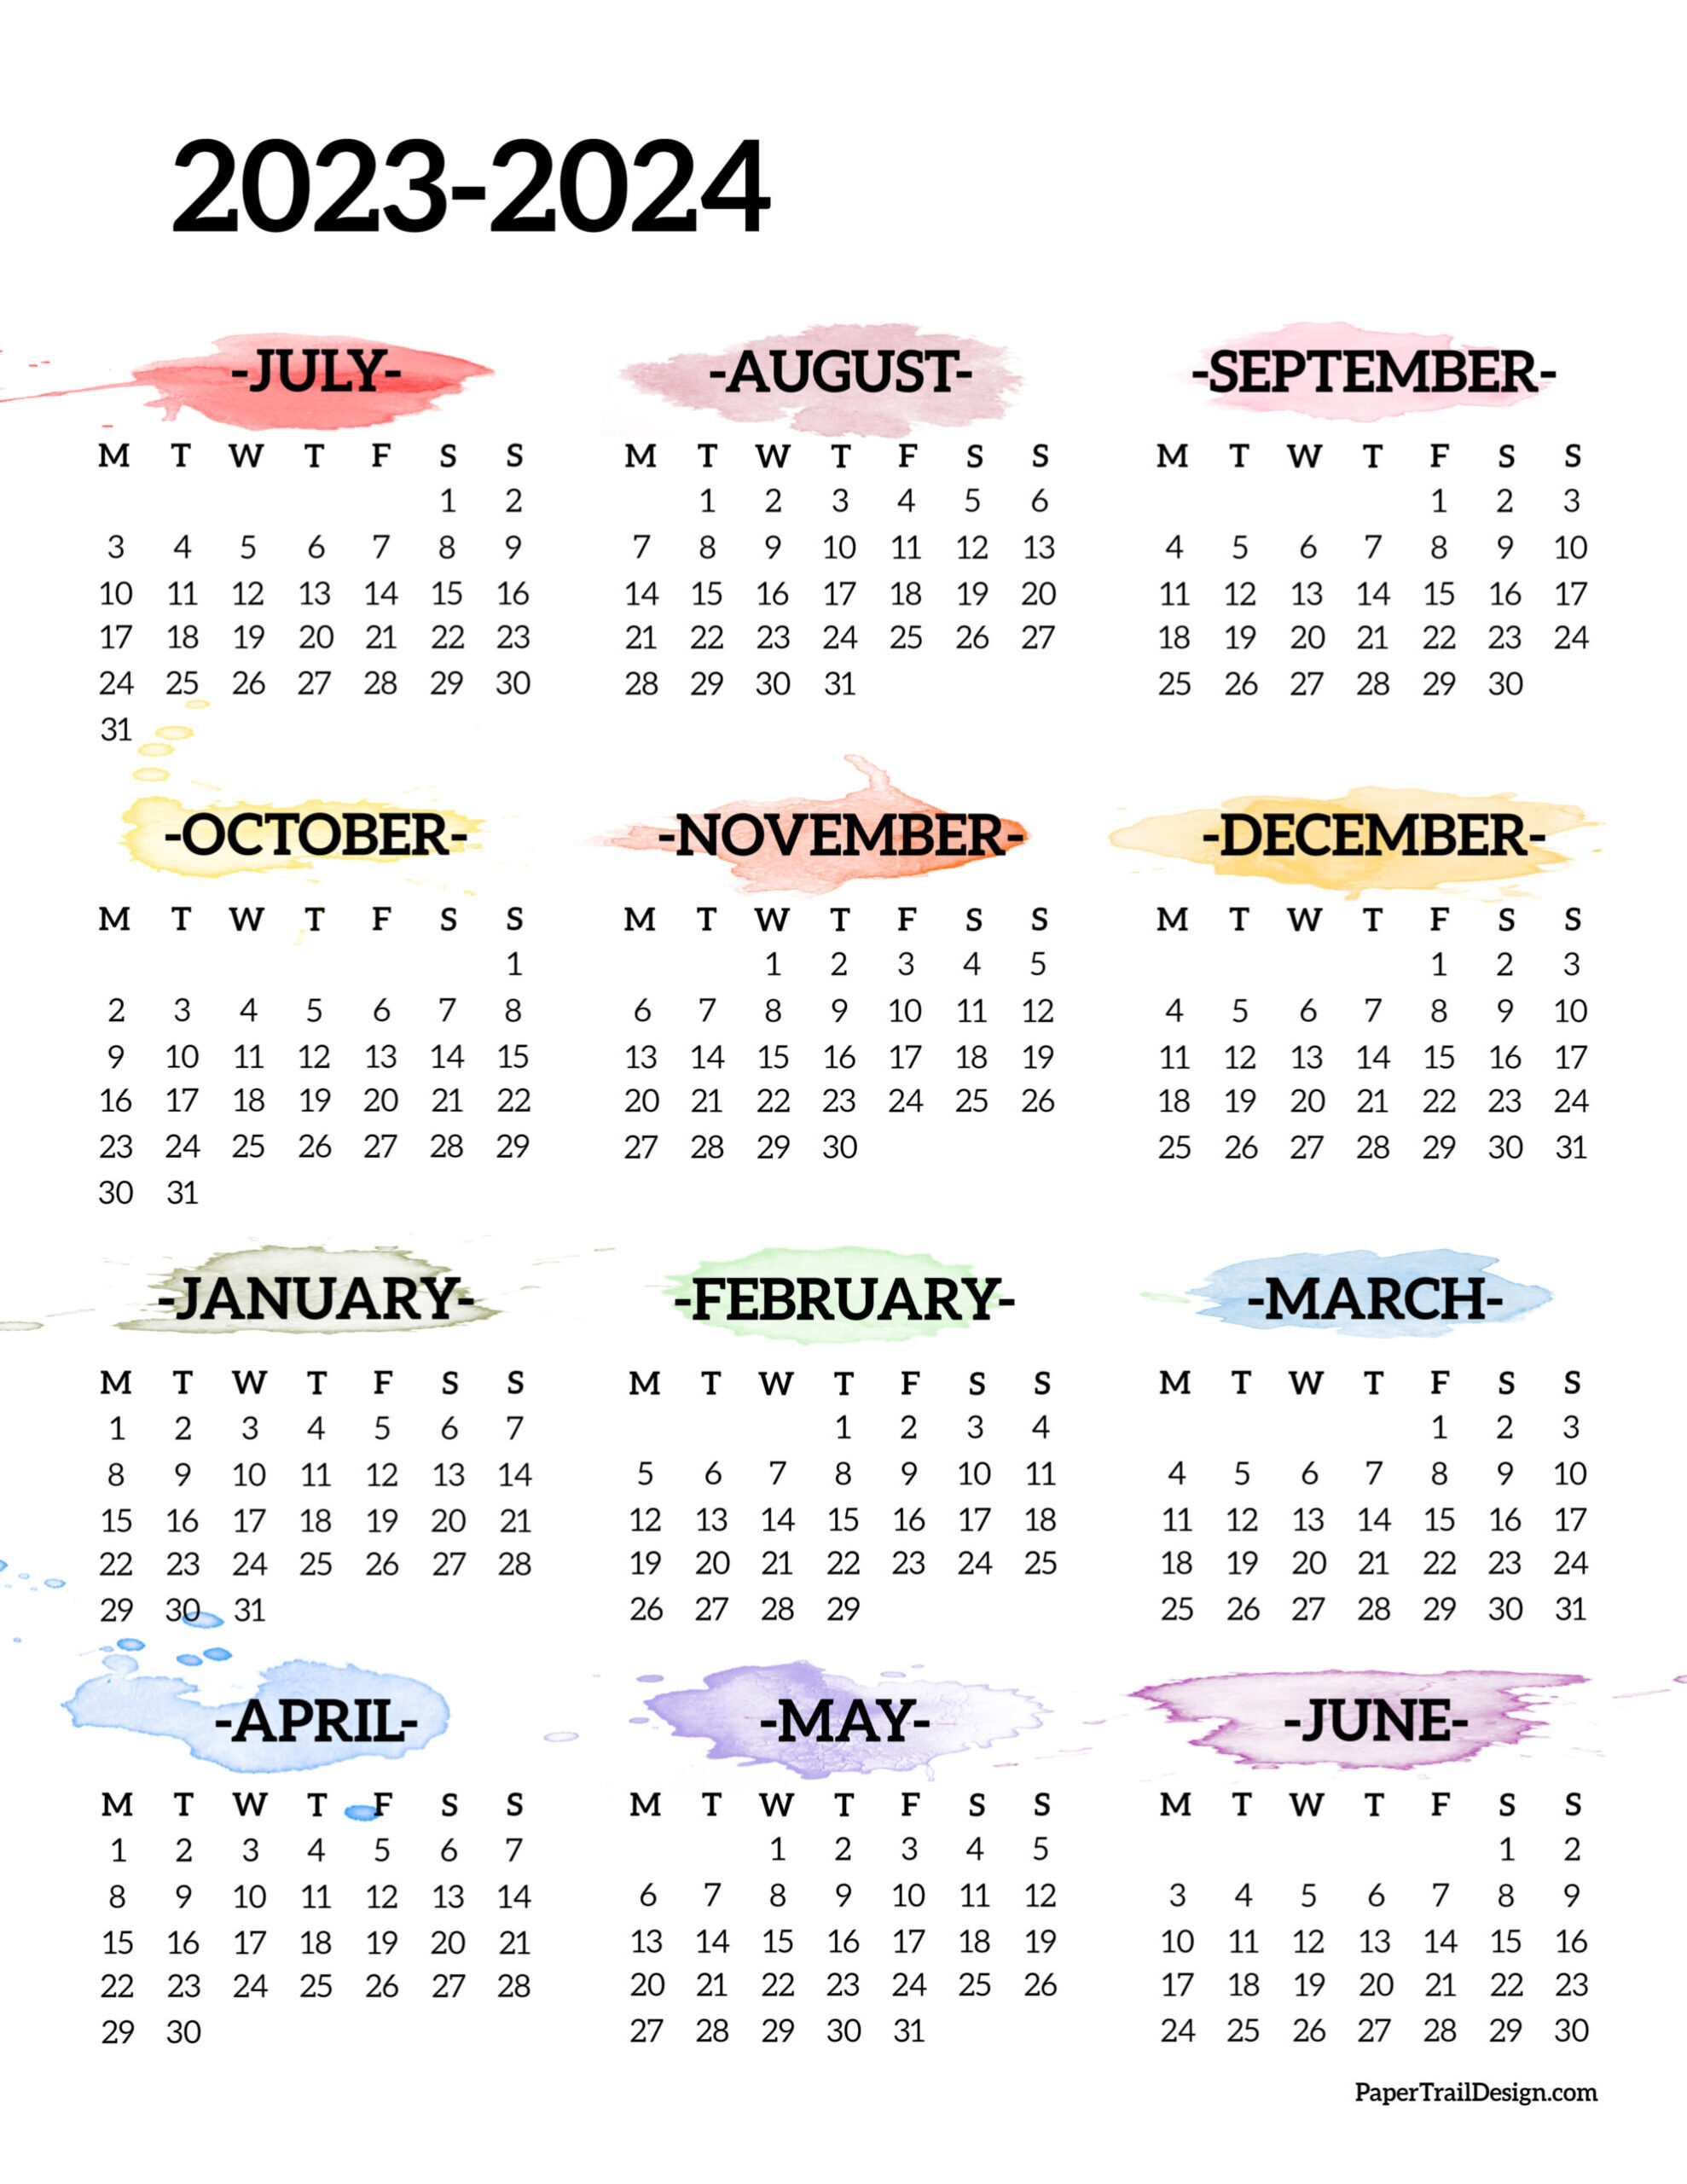 2023-2024 School Year Calendar Free Printable - Paper Trail Design with August 2023 - June 2024 Calendar